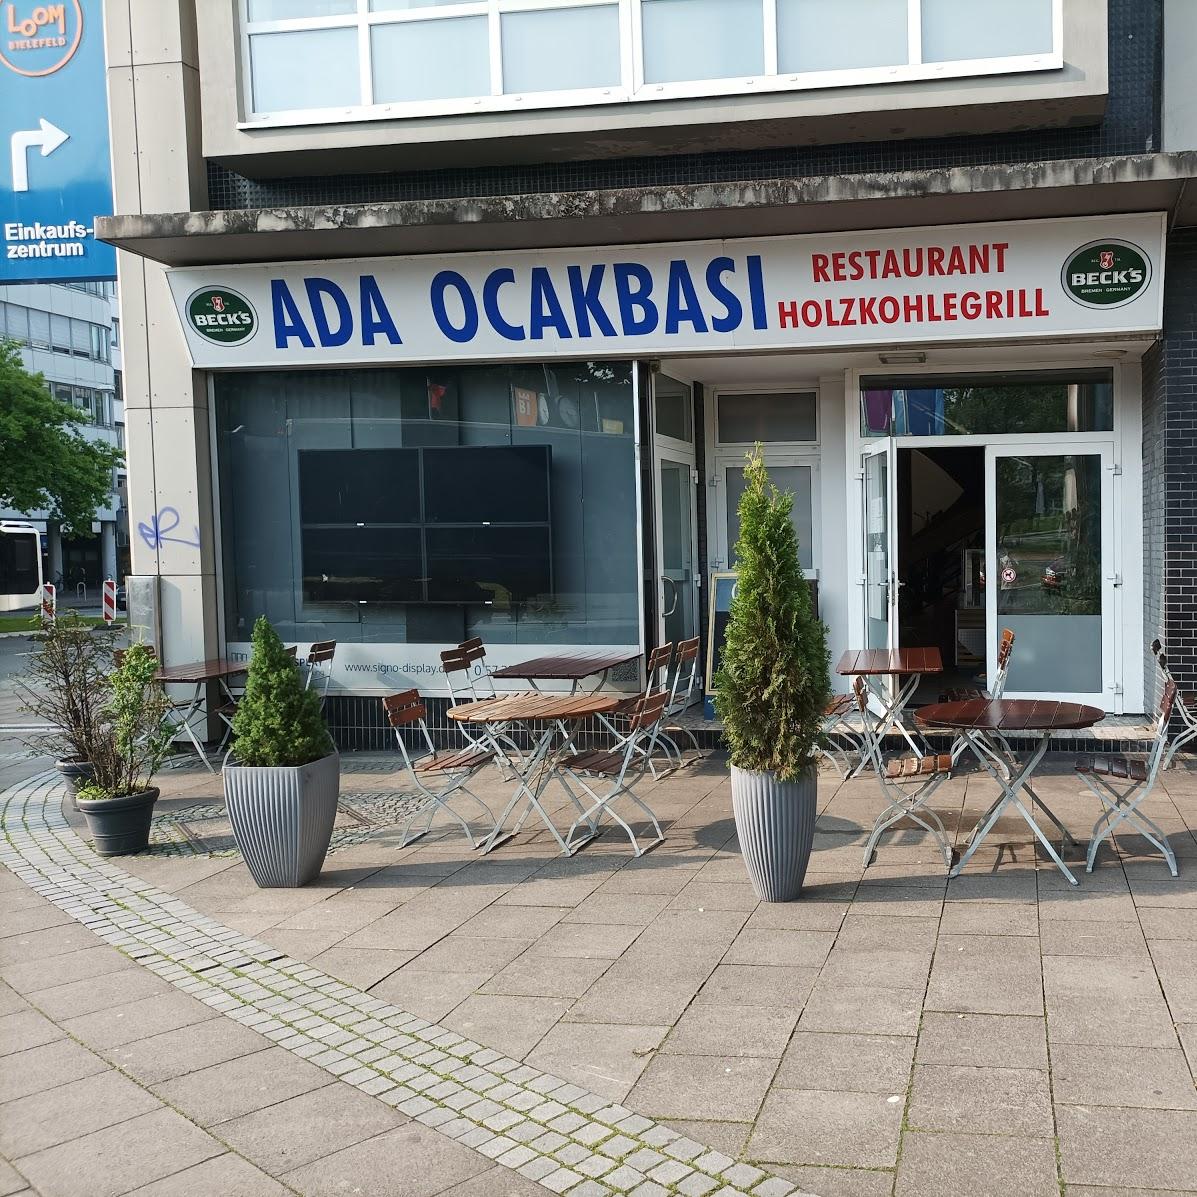 Restaurant "Ada Ocakbasi" in Bielefeld